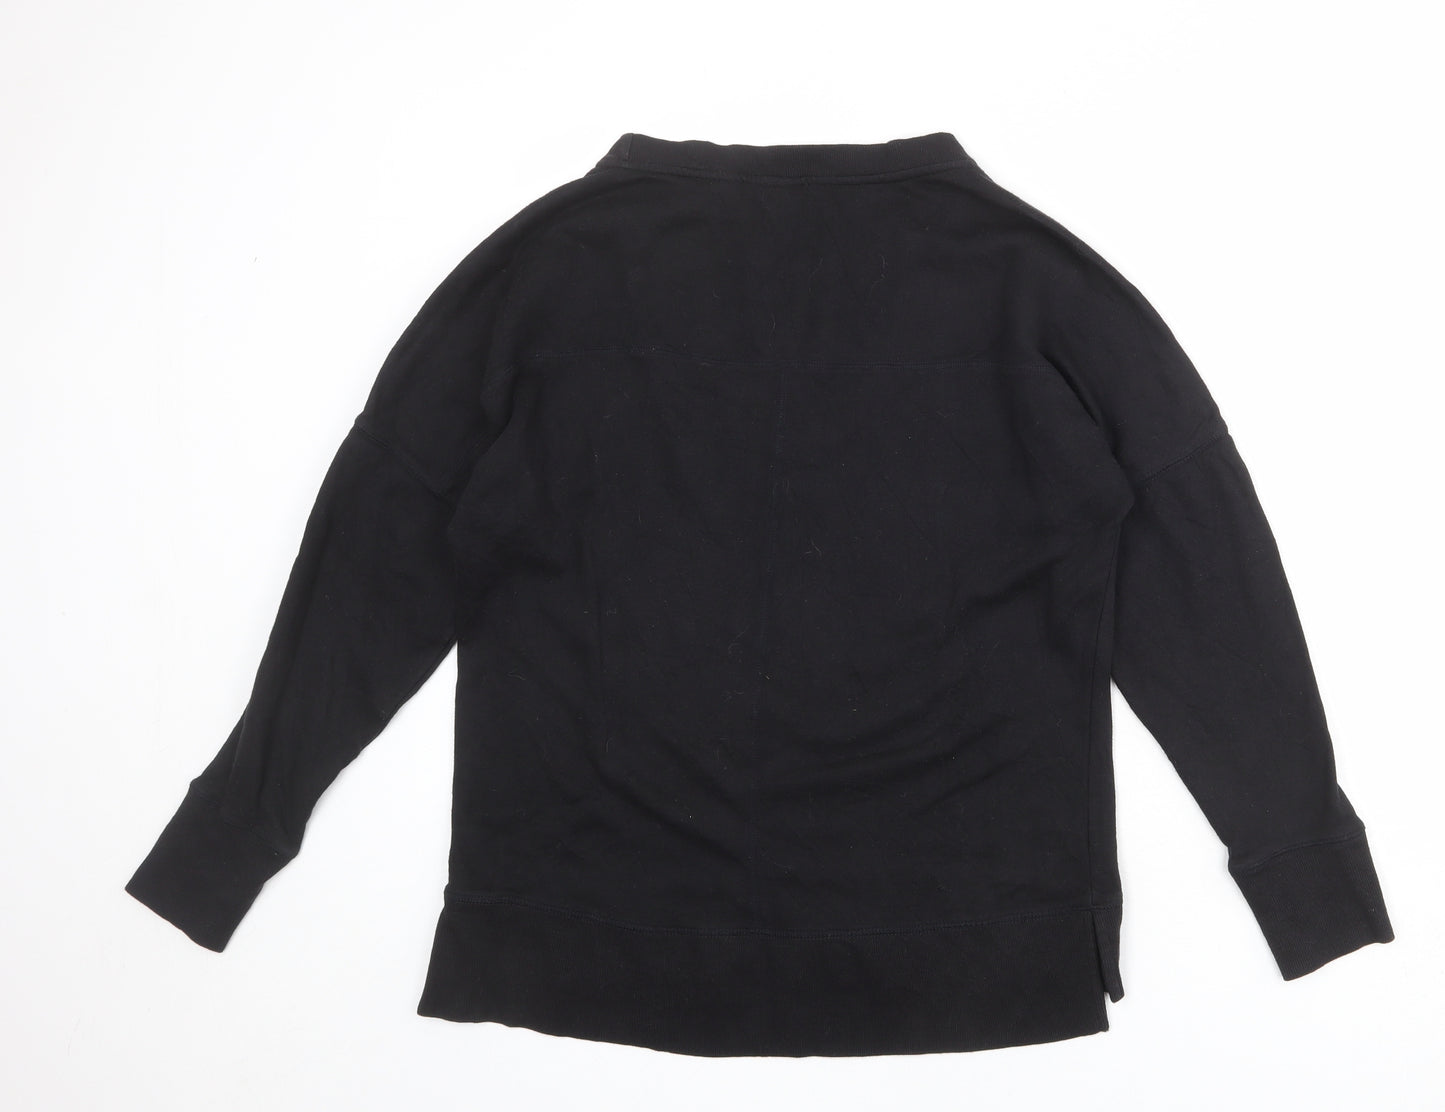 Reebok Womens Black Cotton Pullover Sweatshirt Size M Pullover